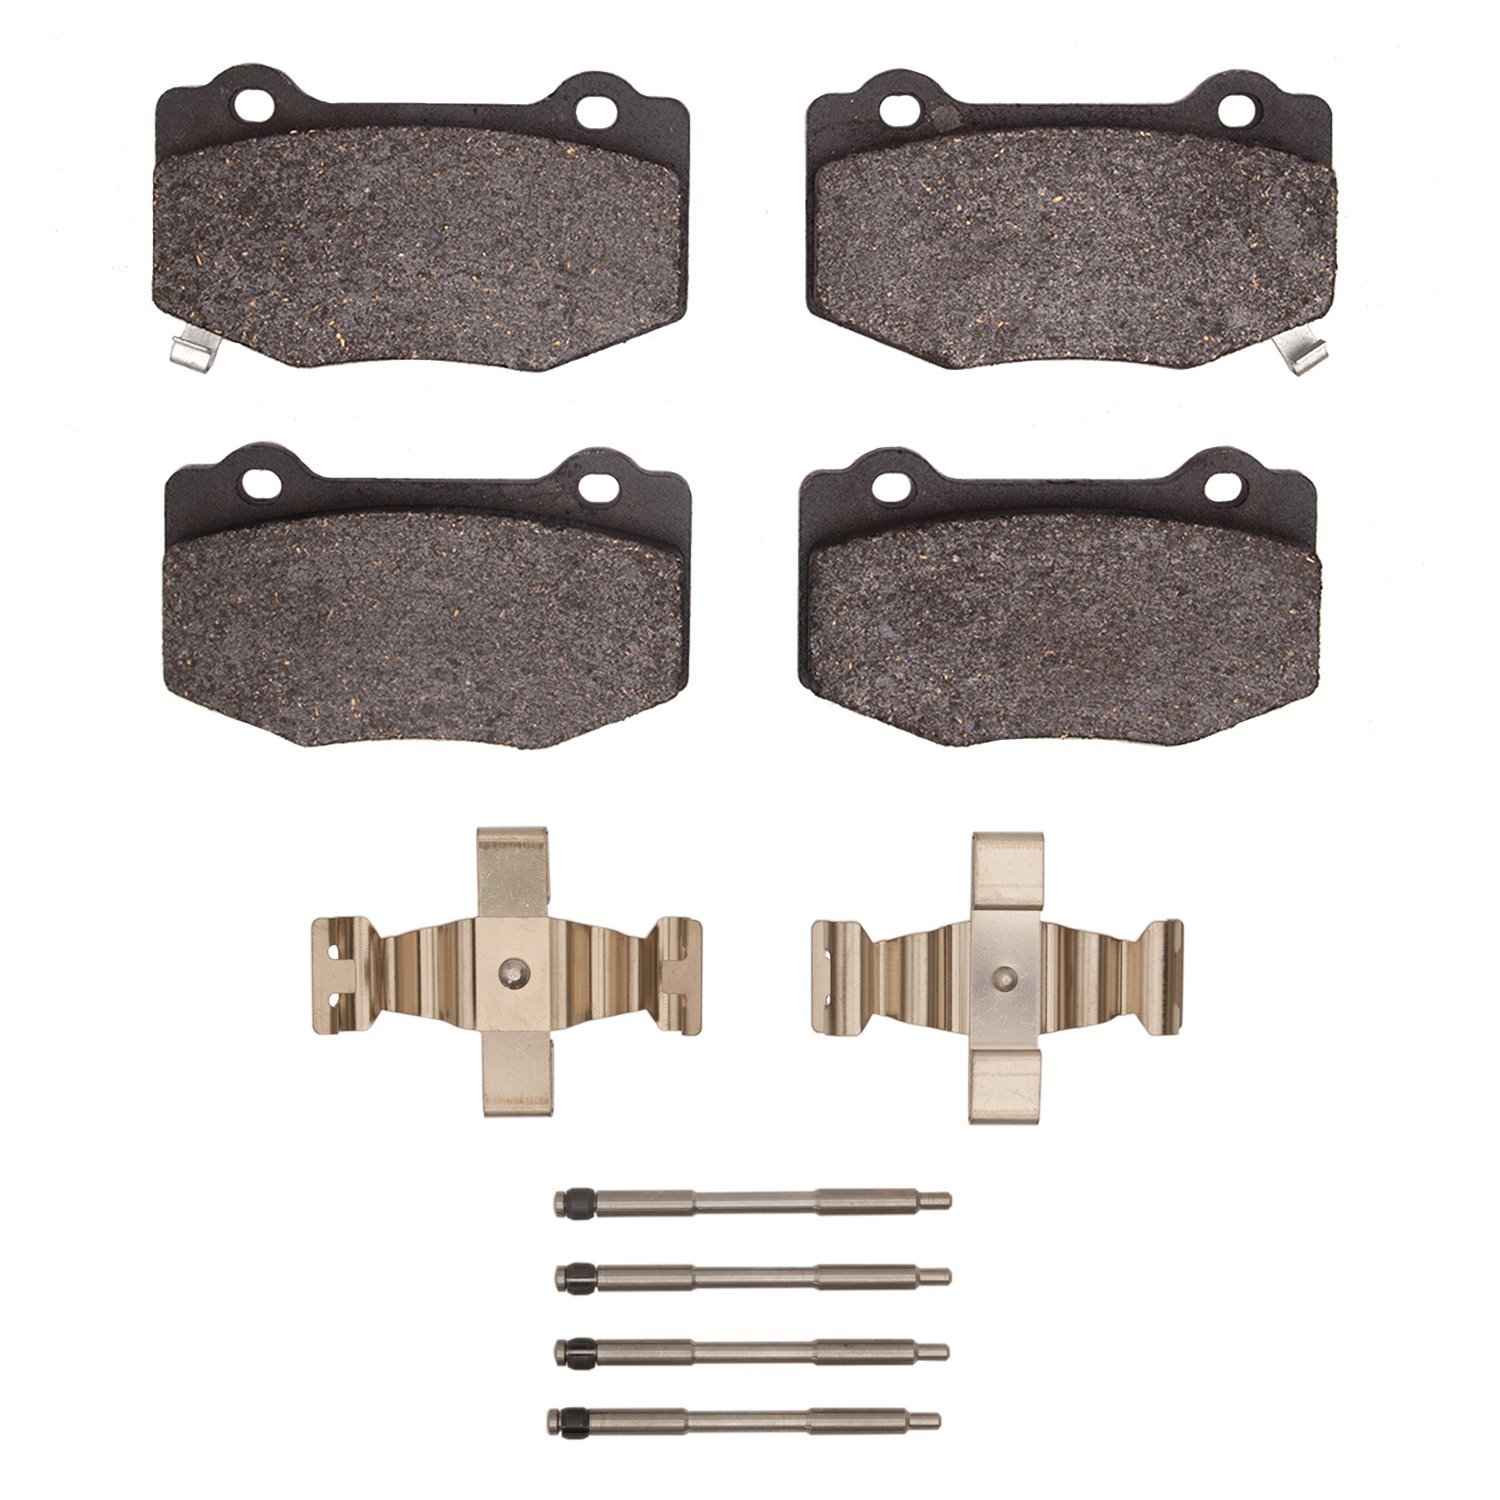 1311-1718-01 3000-Series Semi-Metallic Brake Pads & Hardware Kit, Fits Select GM, Position: Rear